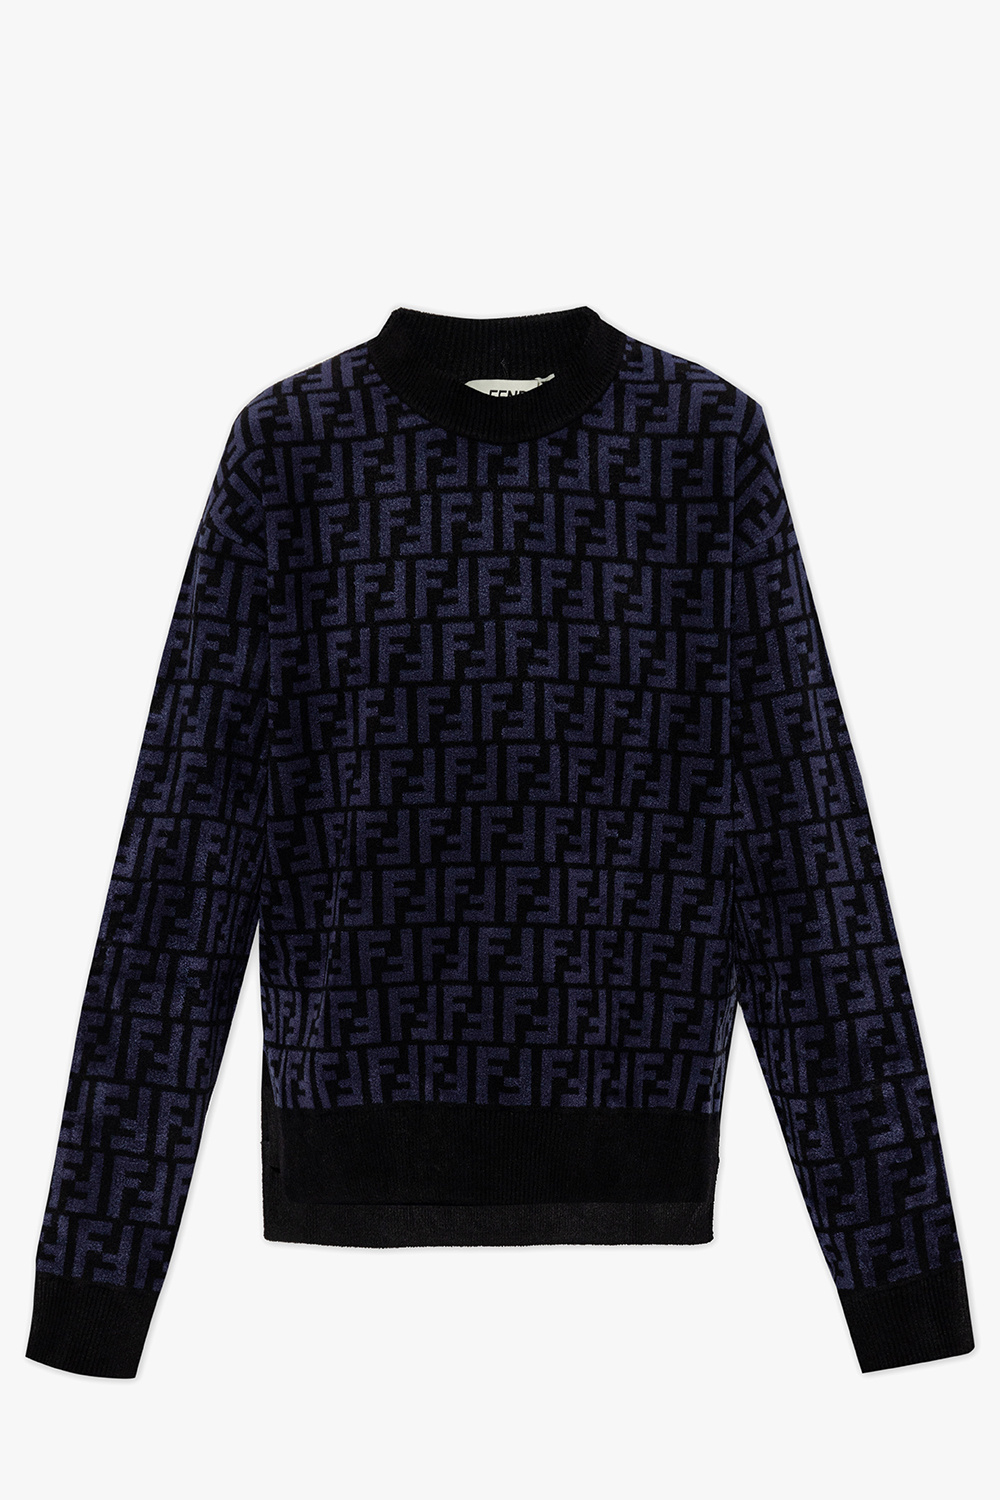 Louis Vuitton Navy Gray One Point Monogram Logo Zip Knit Sweater Xs mens